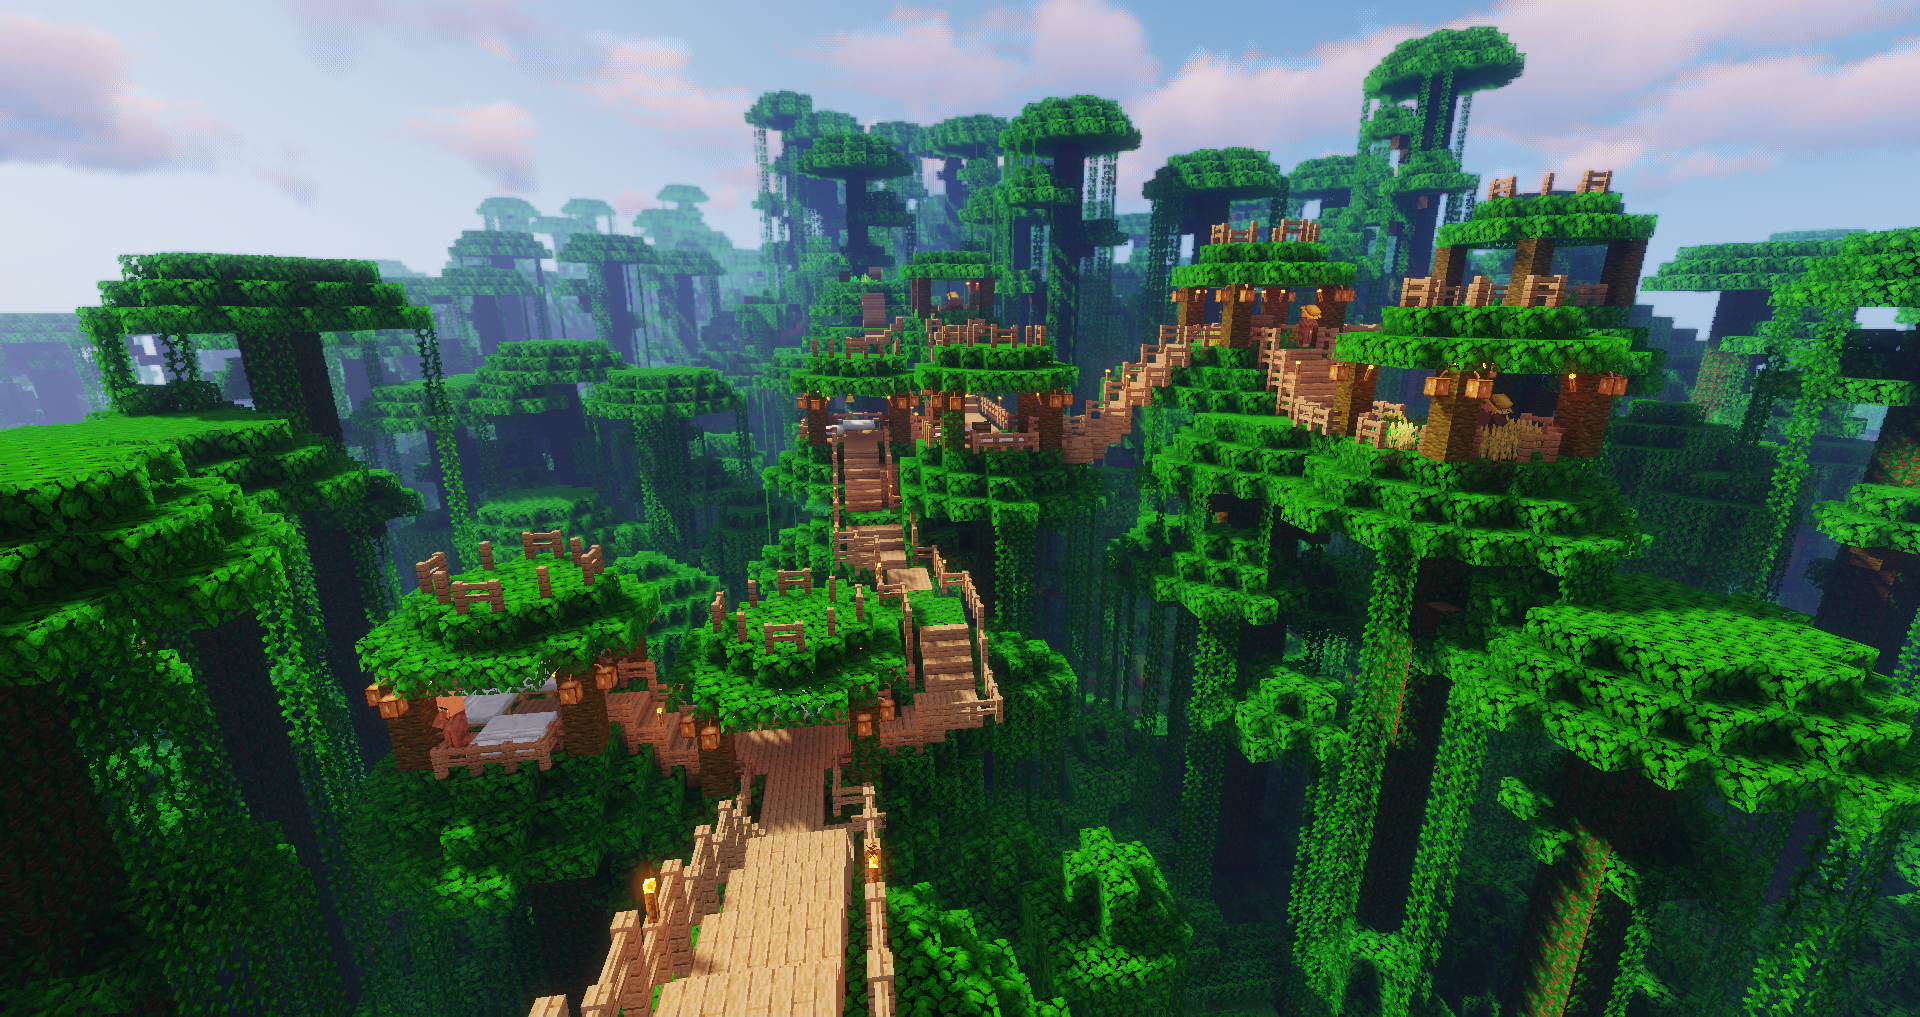 Minecraft jungles. Деревня в джунглях майнкрафт. Джунглевая деревня в майнкрафт. Деревня в джунглях майнкрафт 1.16. Деревня в джунглях майнкрафт 1.4.7.